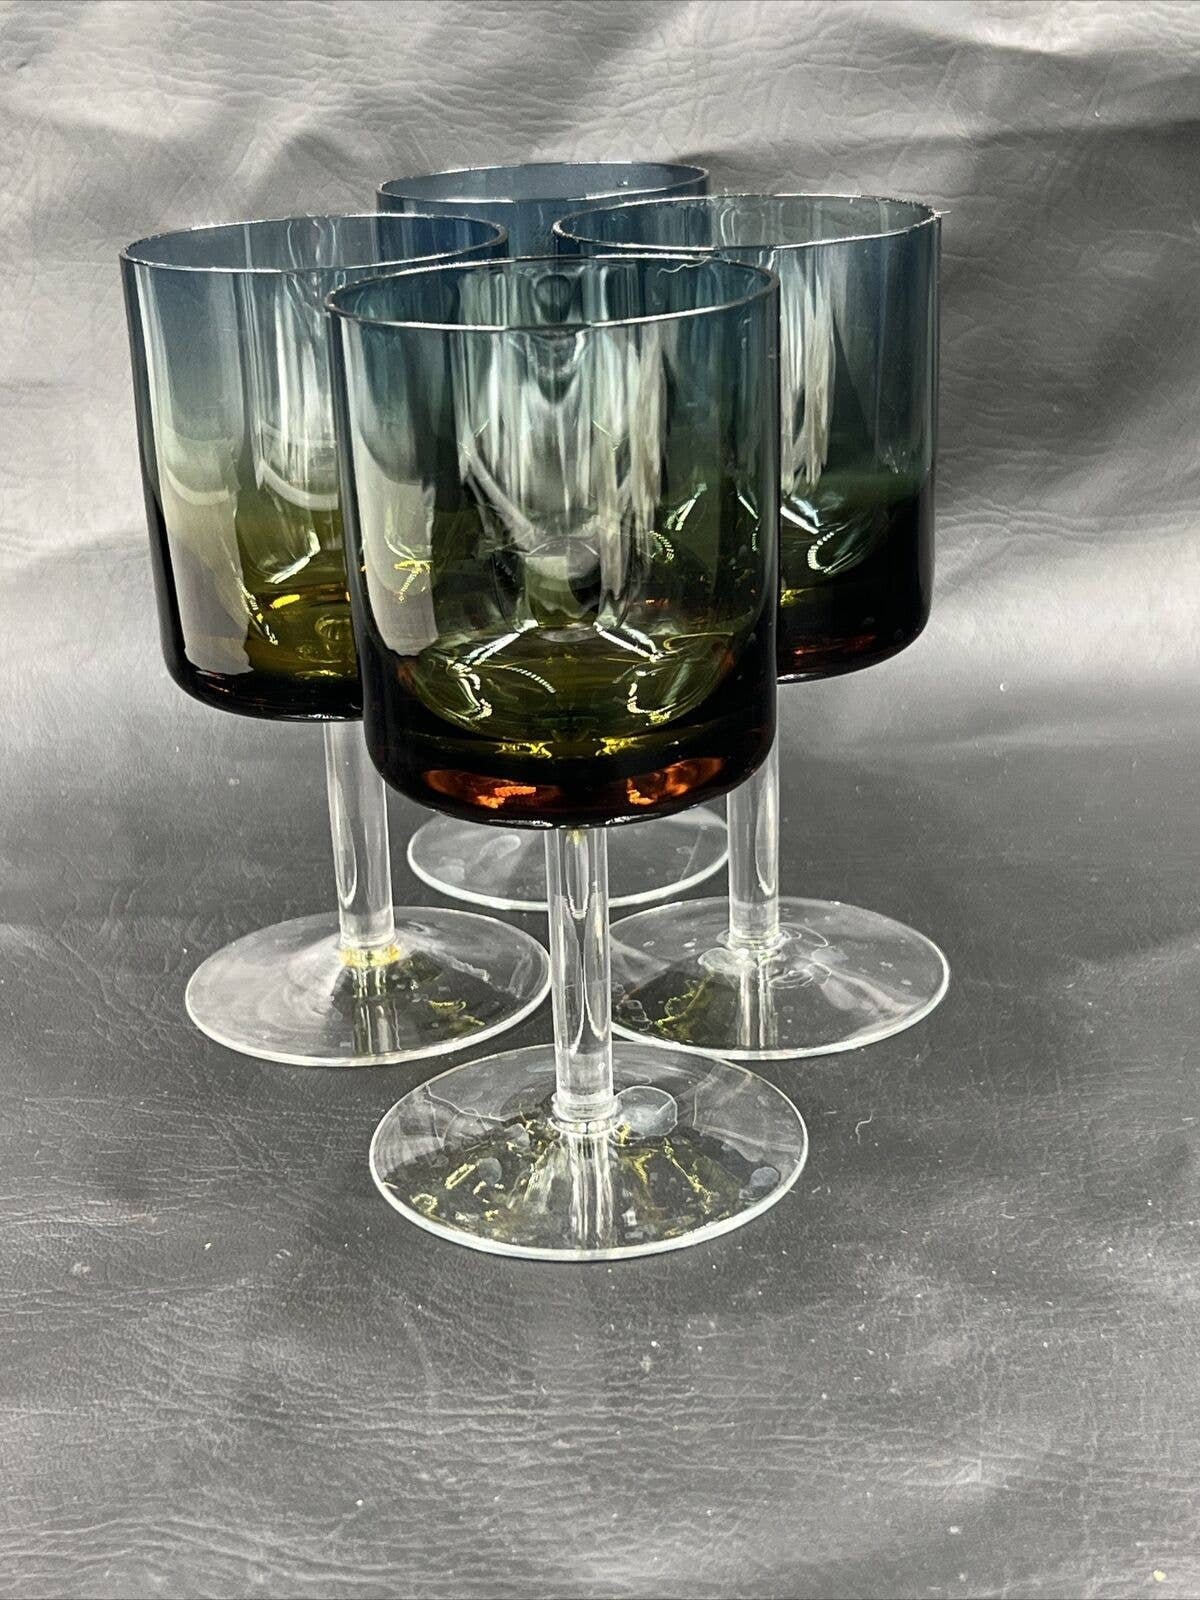 Copas para champagne de vidrio cristalino Splendour Krosno Glass